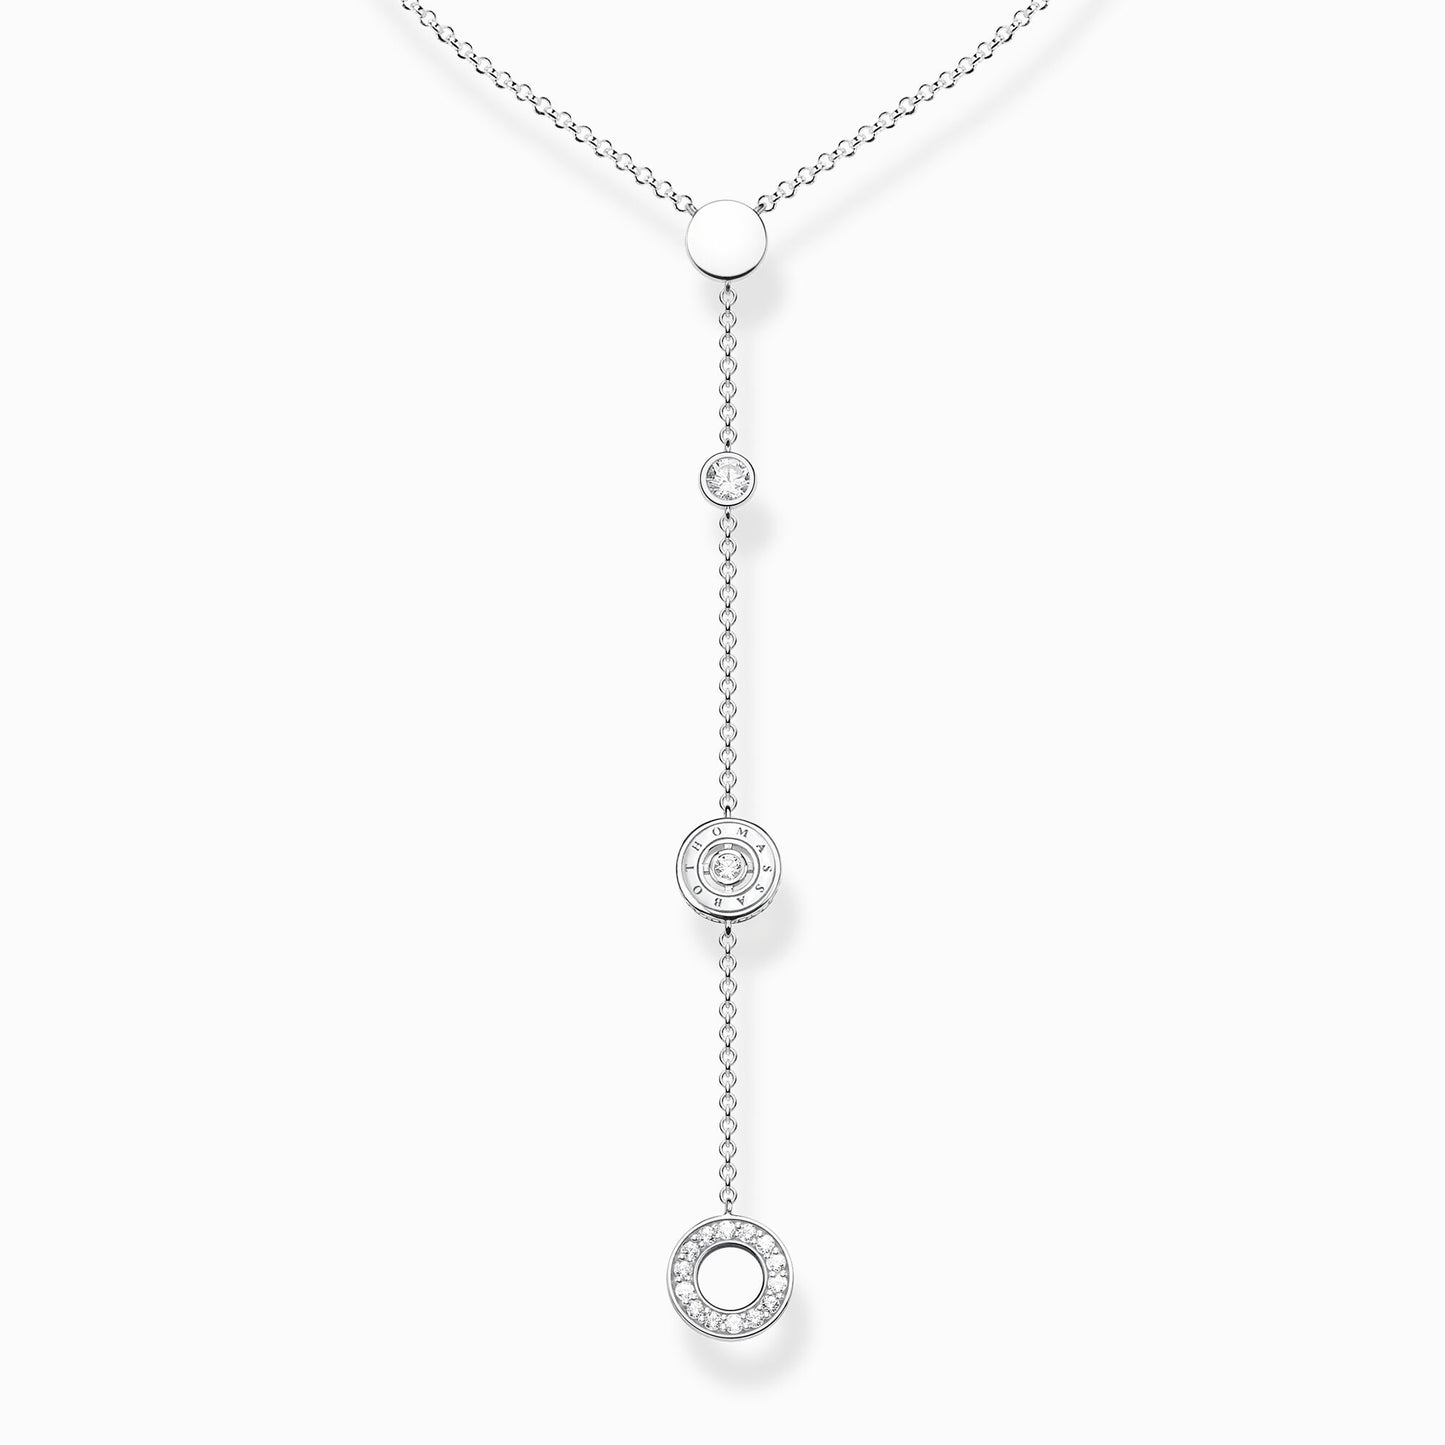 Thomas Sabo Necklace Circles With White Stones Silver KE1879-051-14